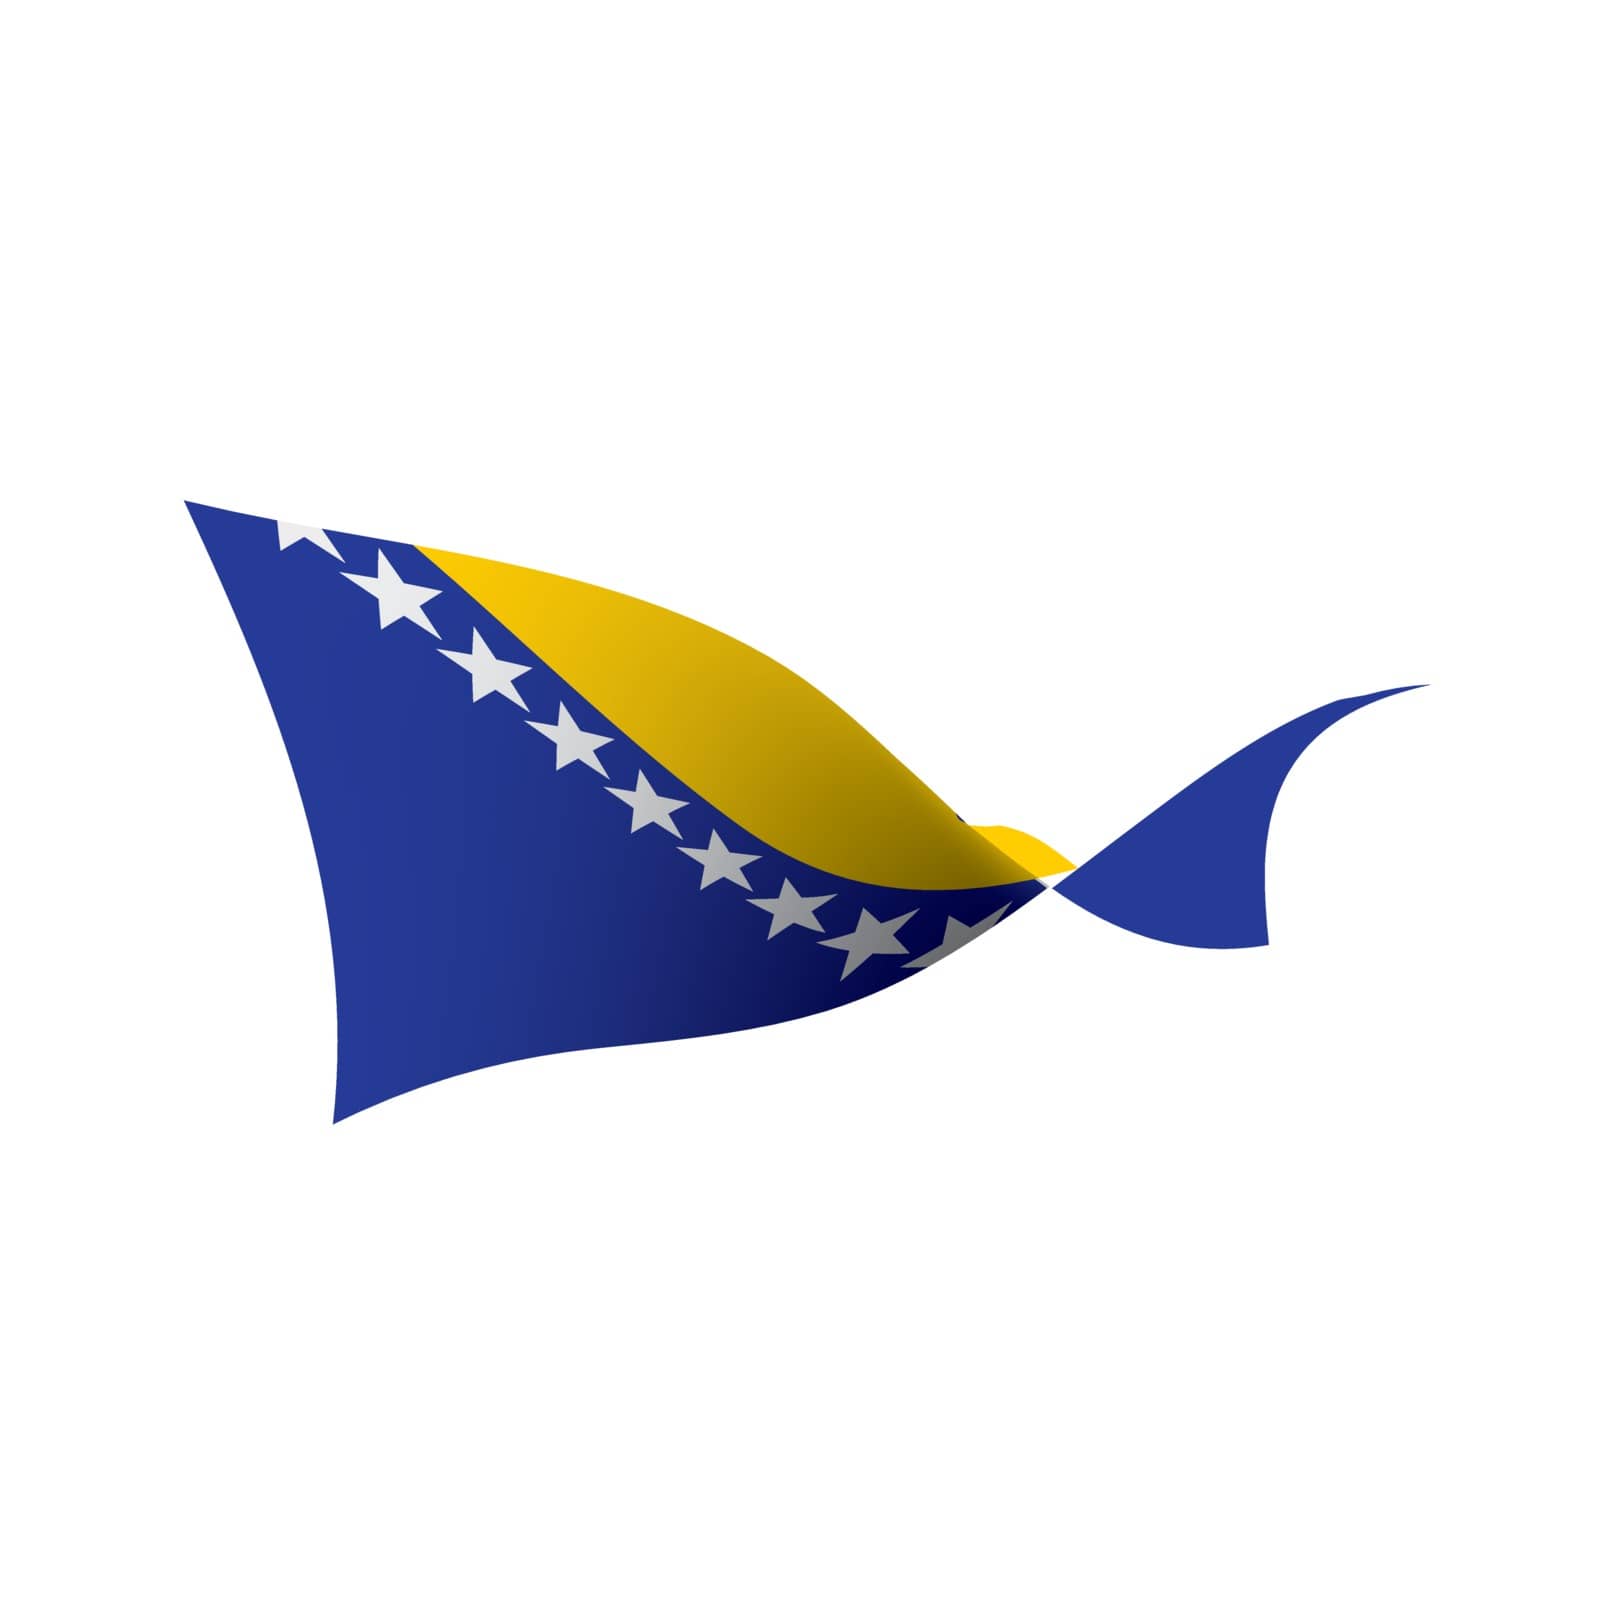 Bosnia and Herzegovina flag, vector illustration by butenkow